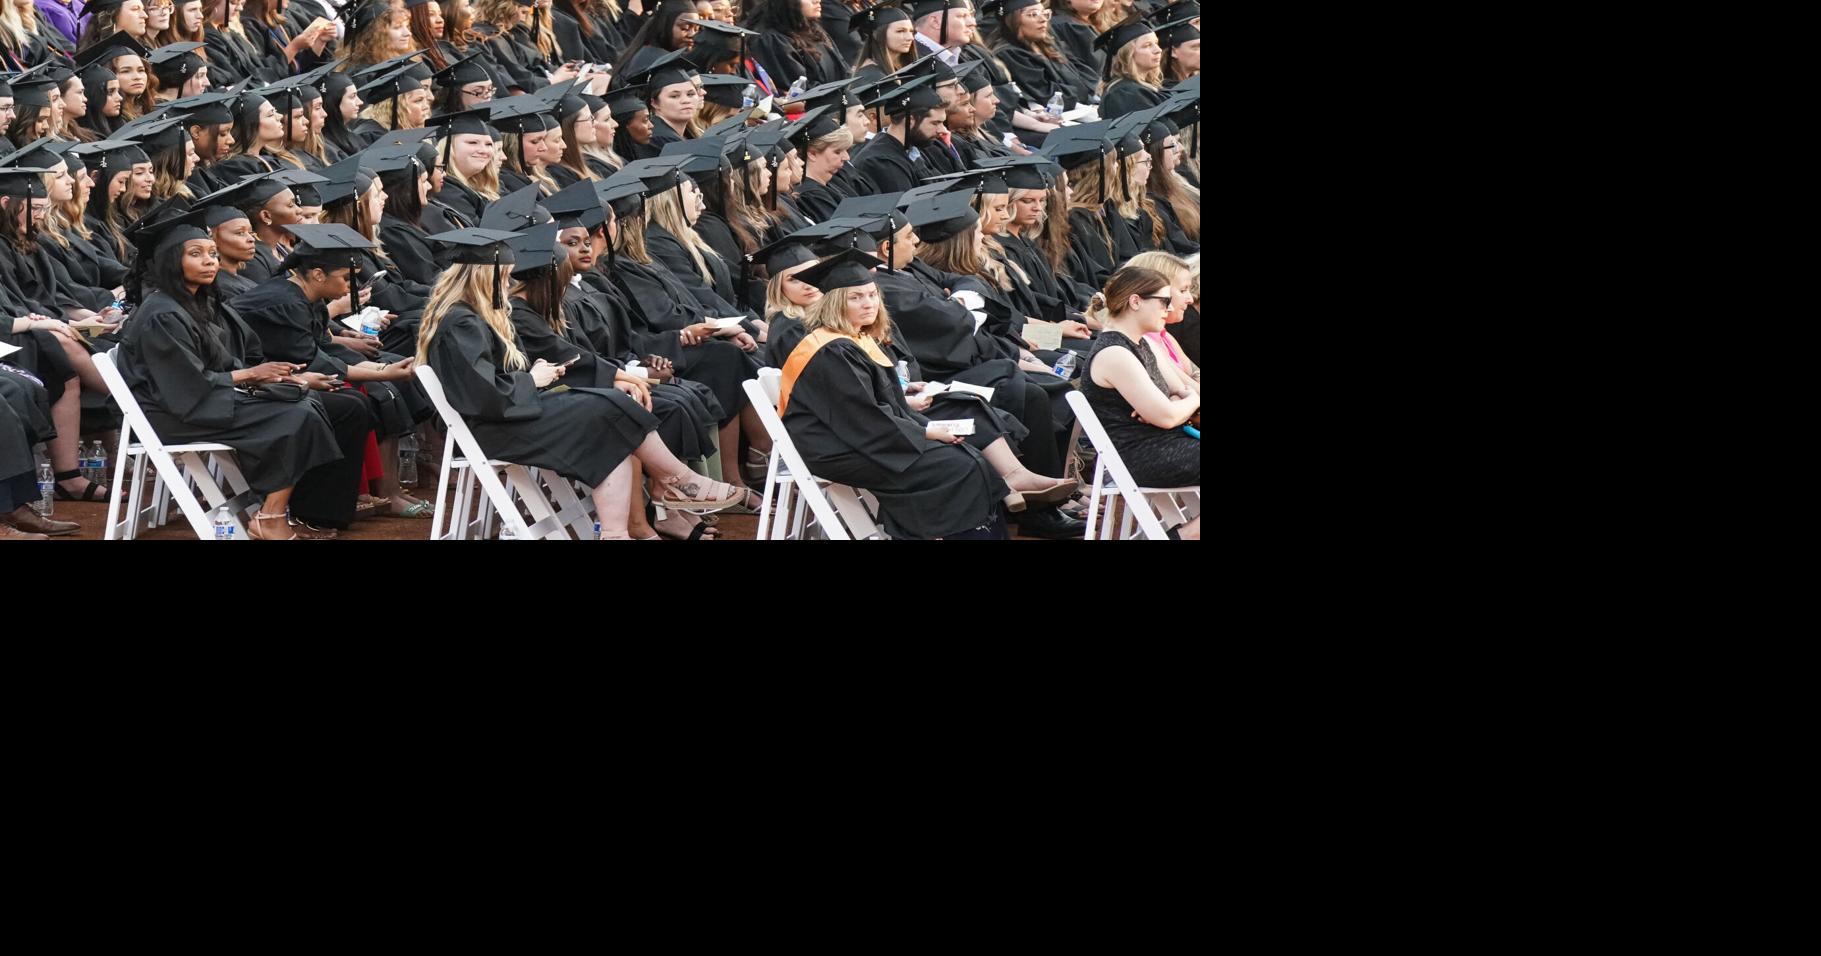 Pennsylvania College of Health Sciences graduation [photos]